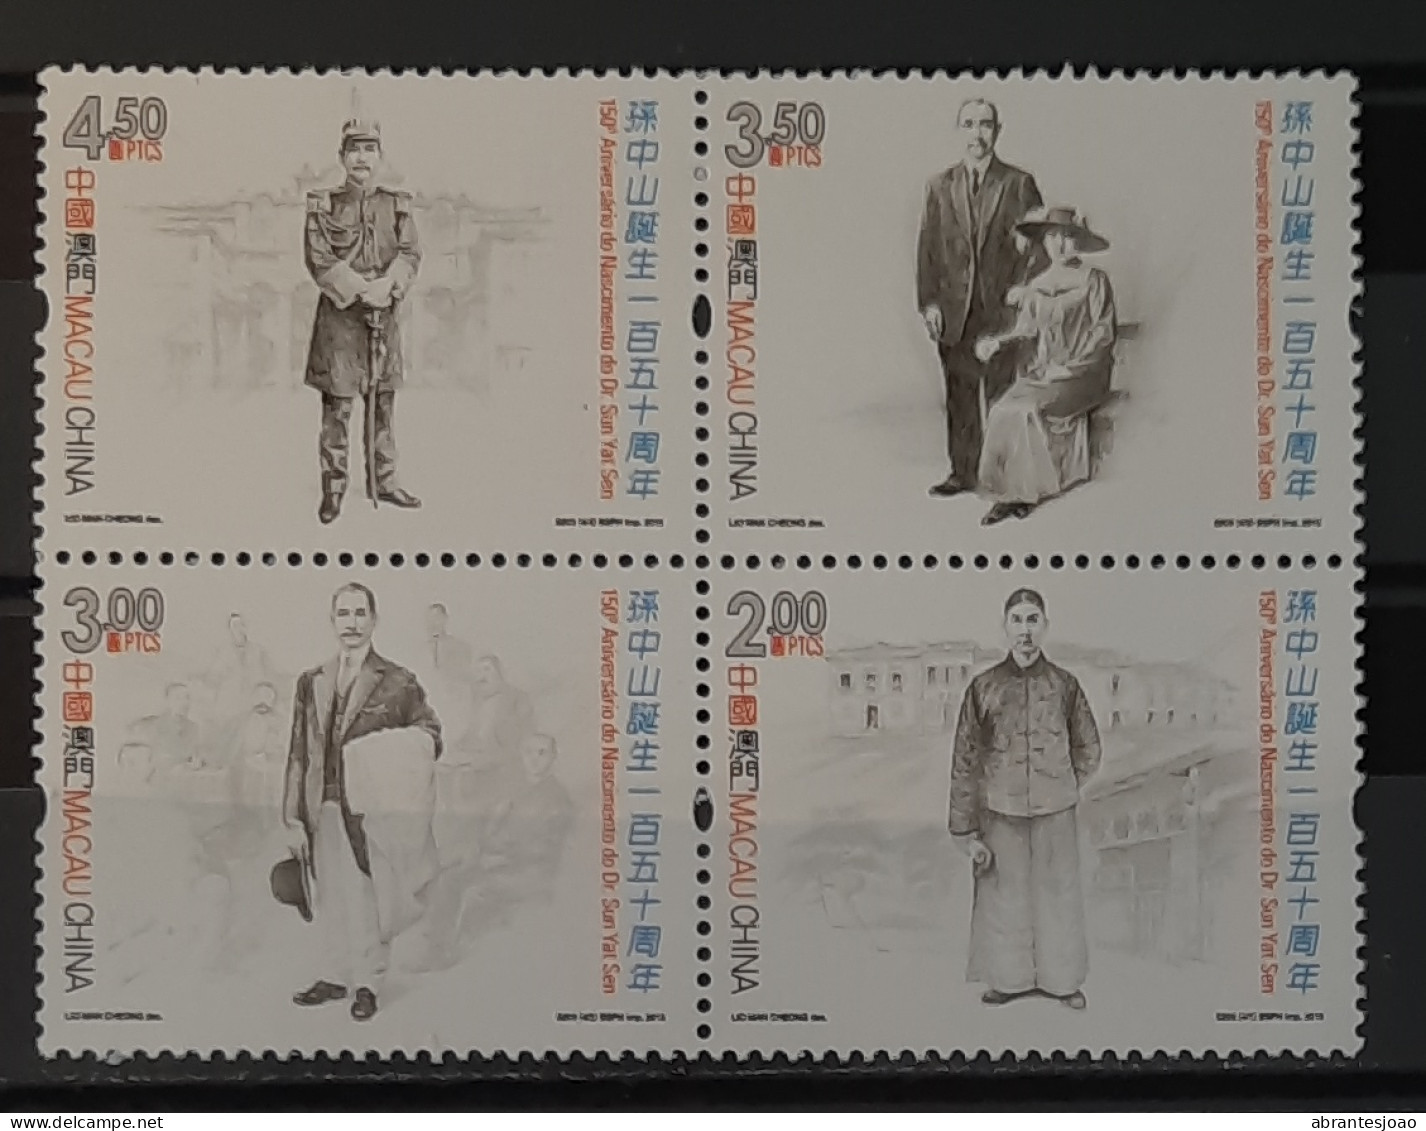 2016 - Macau - MNH - 150th Birthday Of Dr. Sun Yat Sen - Block Of 4 Stamps - Used Stamps